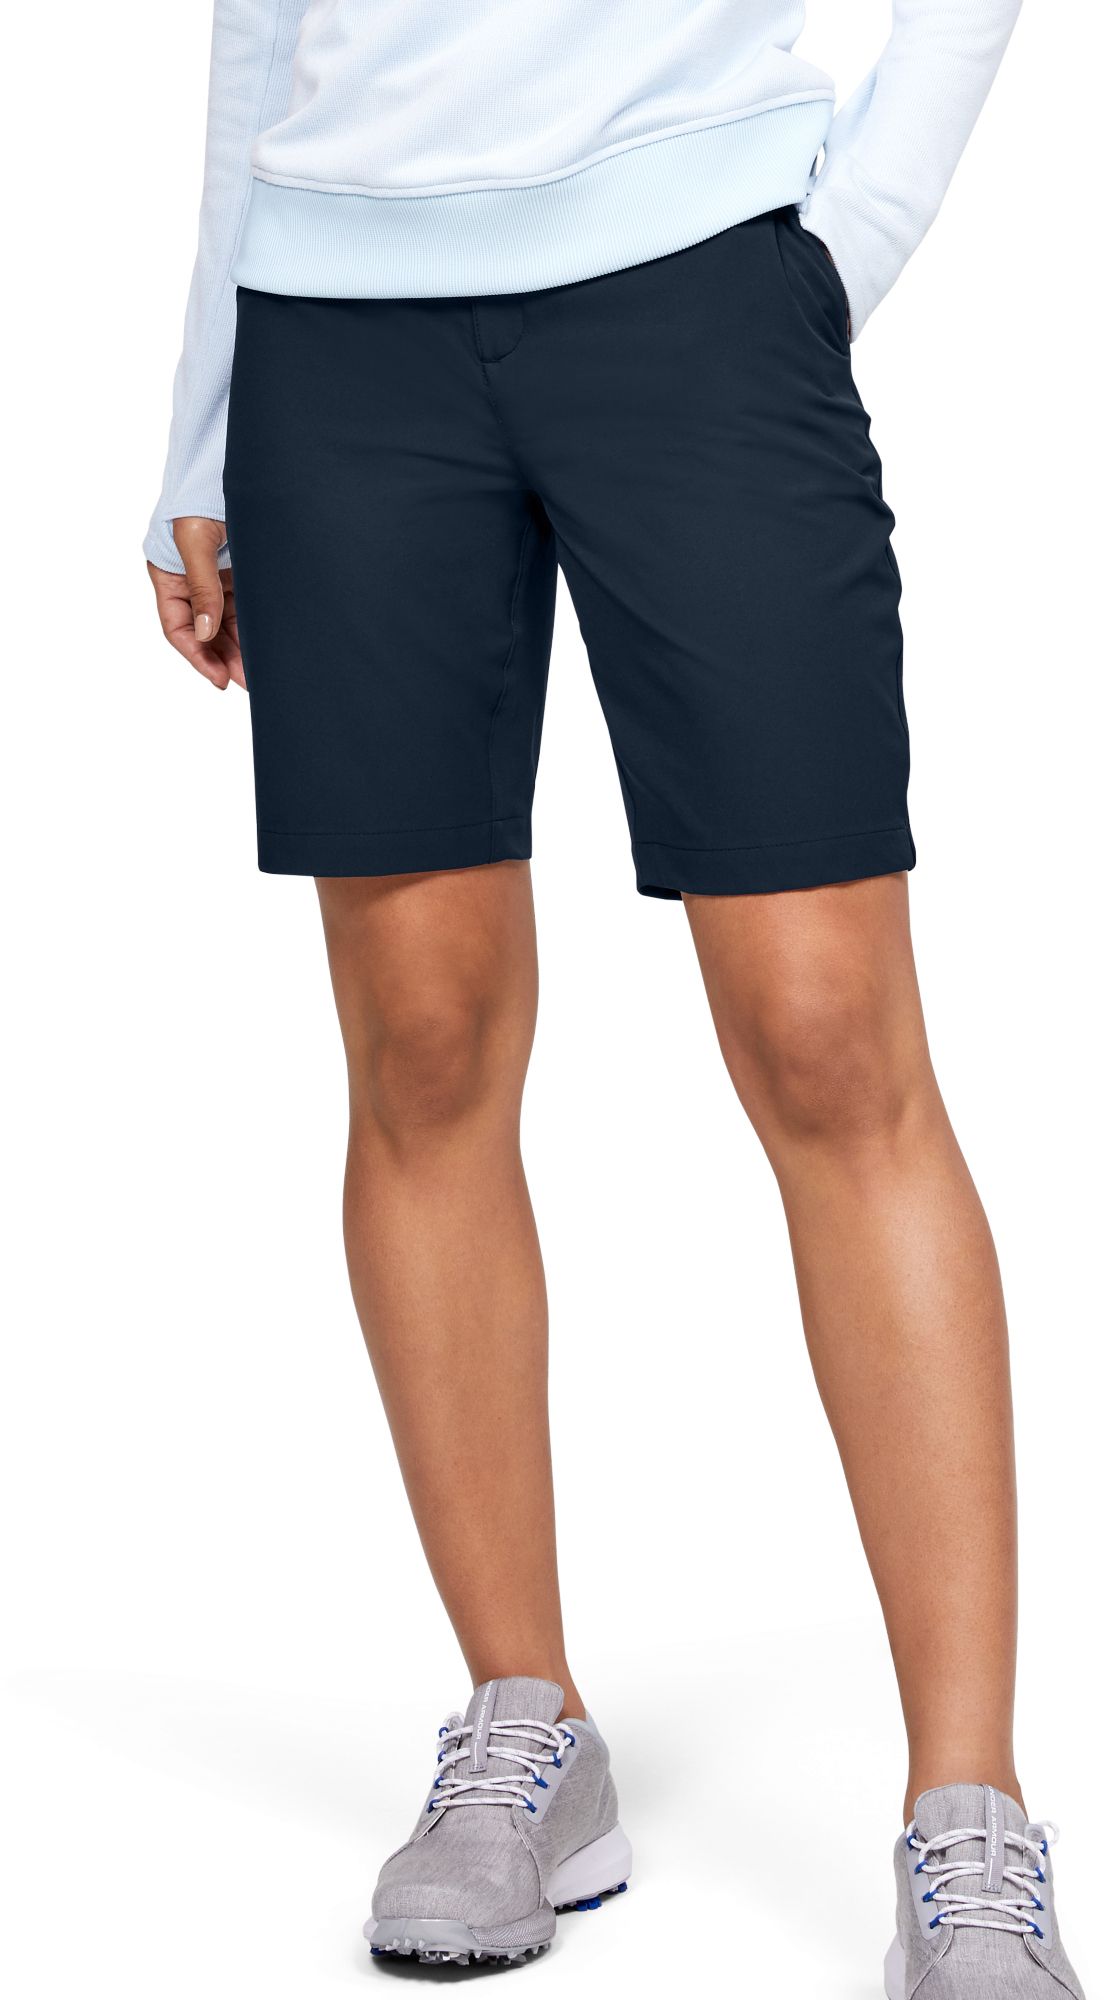 underarmour golf shorts